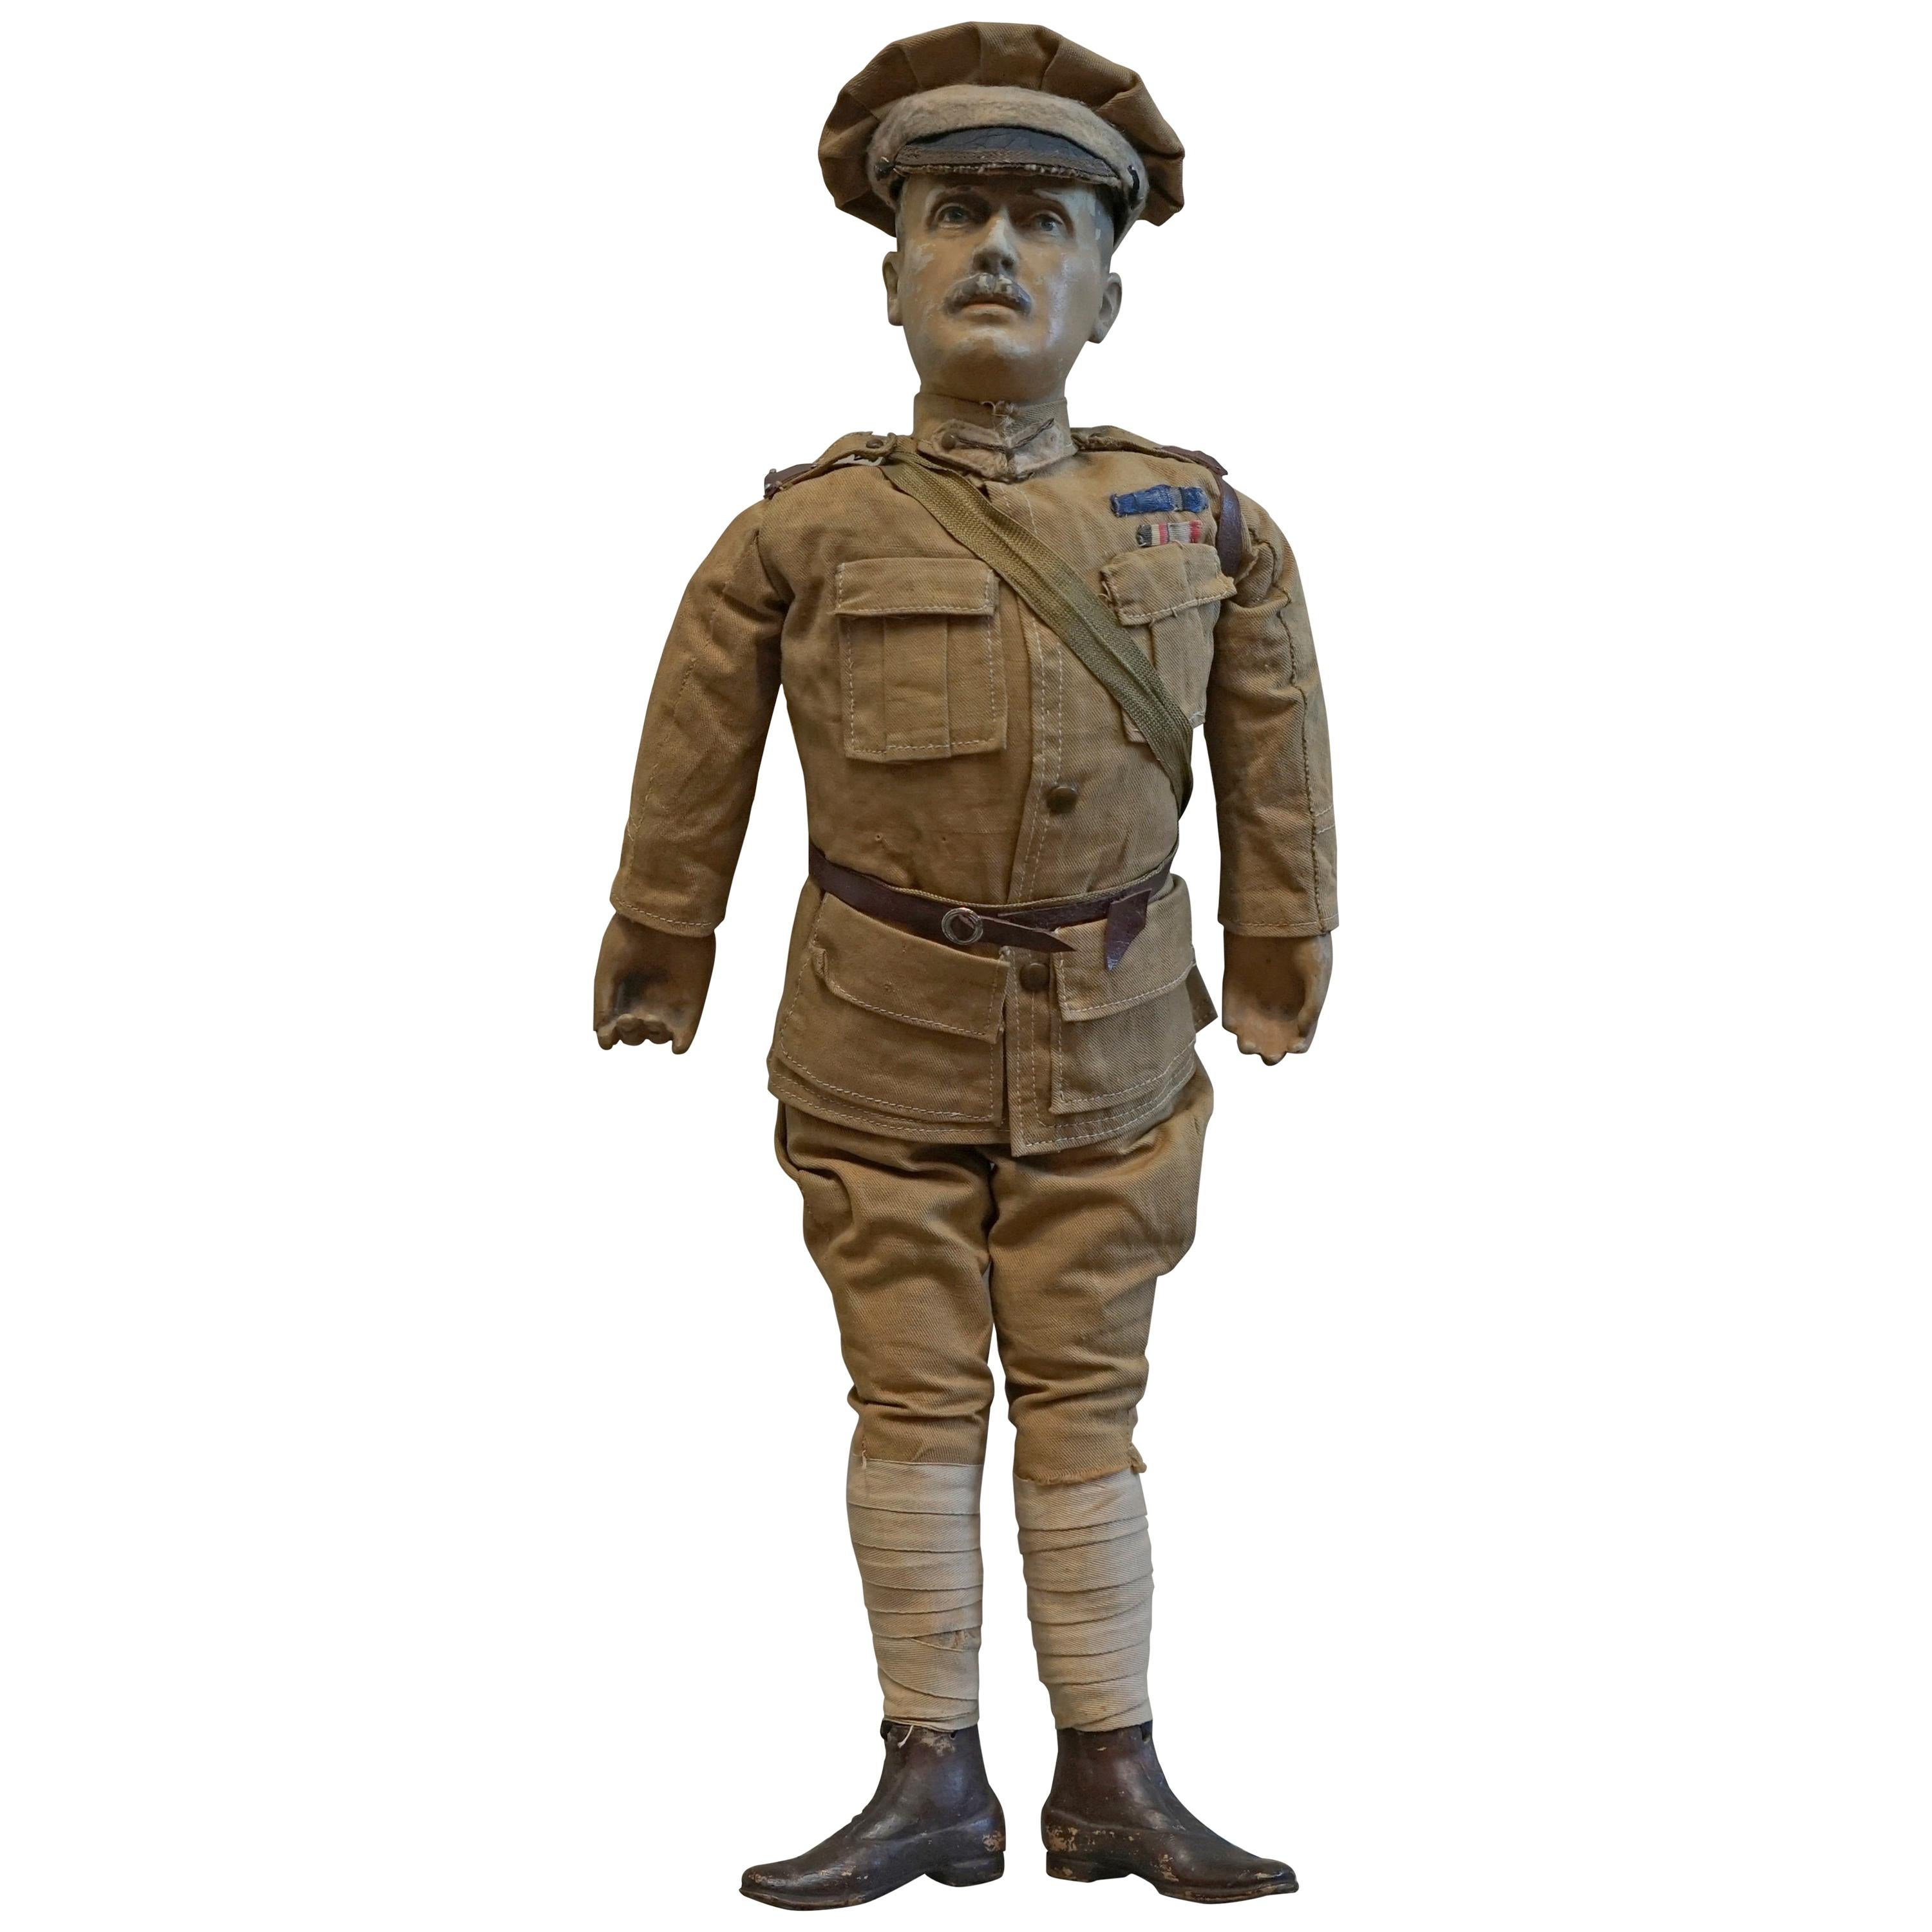 Very Rare 1898-1914 British Patriotic Propaganda Doll of Lord Horatio Kitchener For Sale